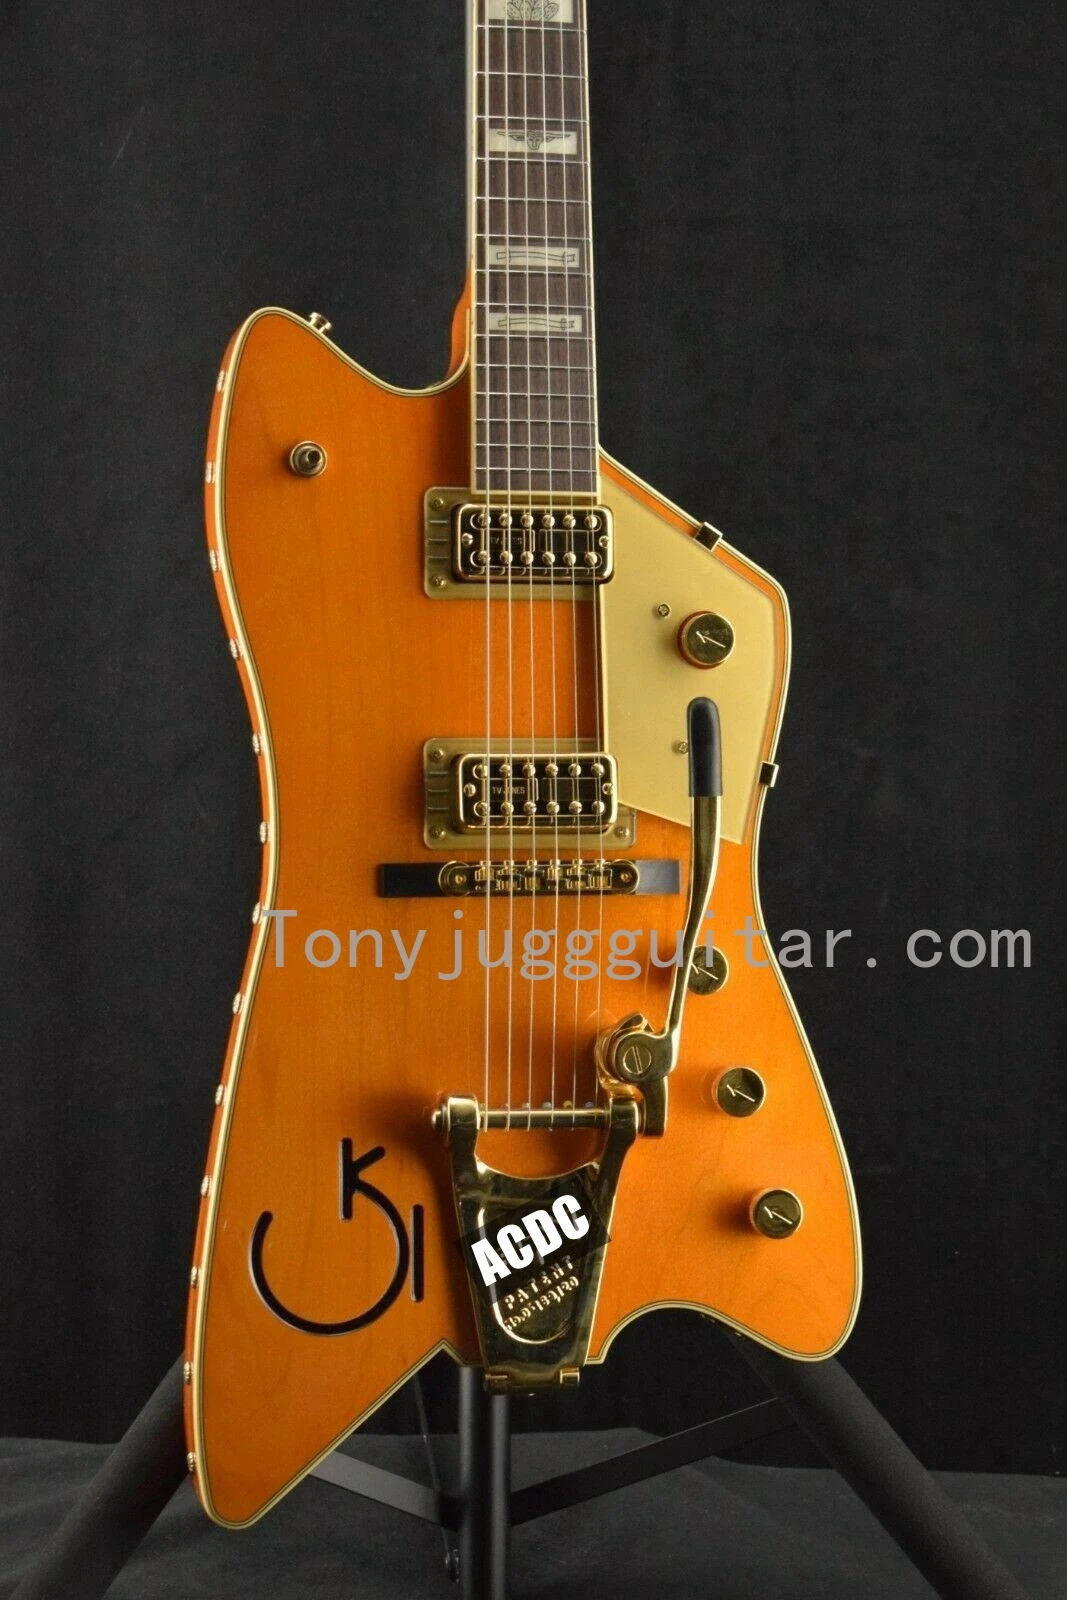 

Billy Bo Jupiter Orange Eddie Cochran Thunder Electric Guitar , Bigs Tremolo Bridge, Gold Hardware